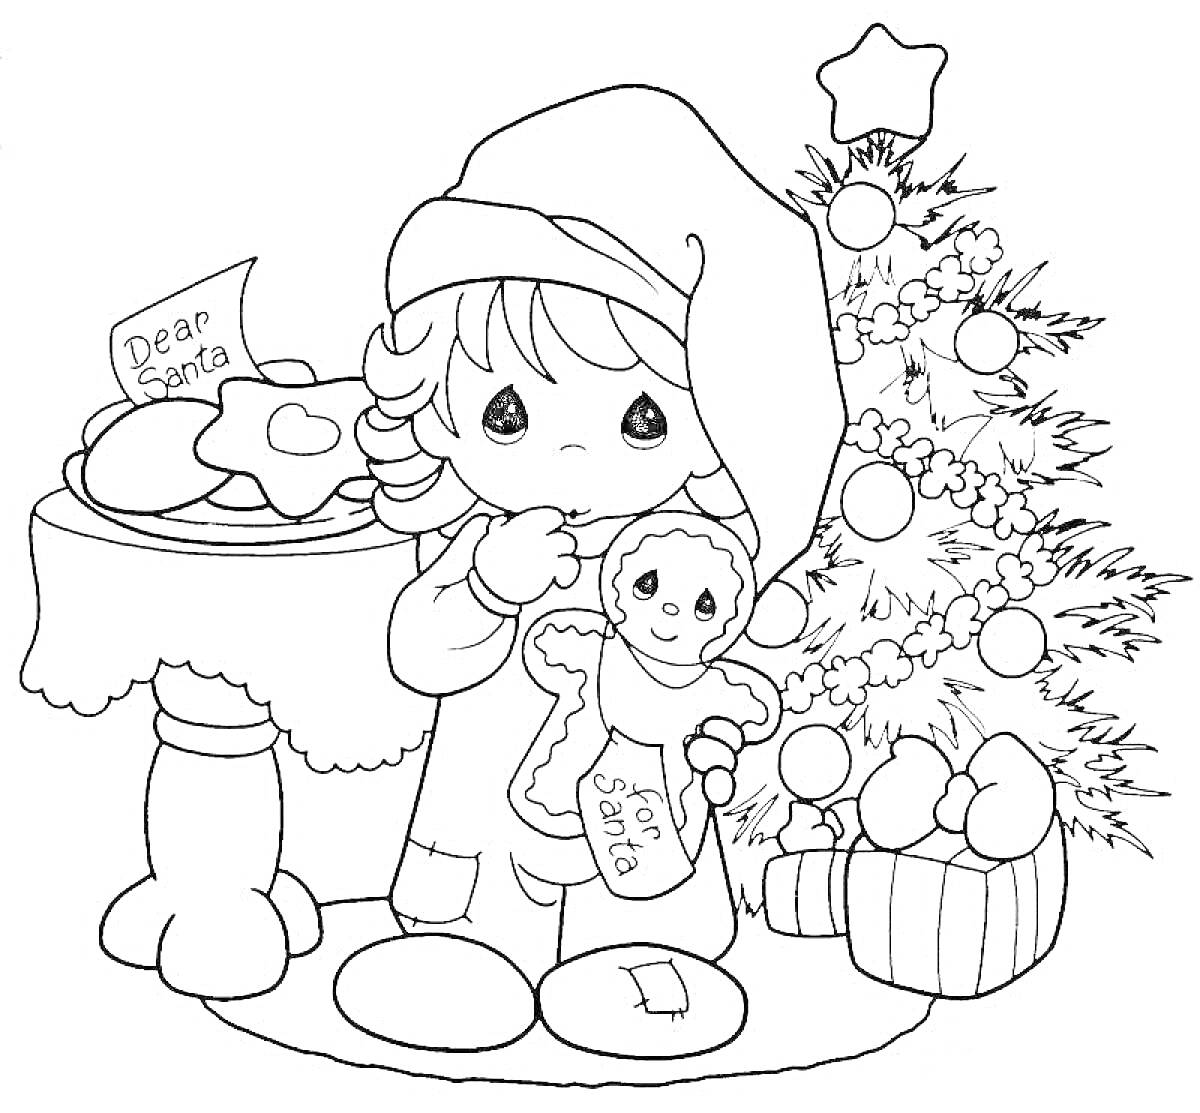 На раскраске изображено: Рождество, Ребёнок, Игрушки, Подарки, Печенье, Санта Клаус, Носки, Елки, Письма, Праздники